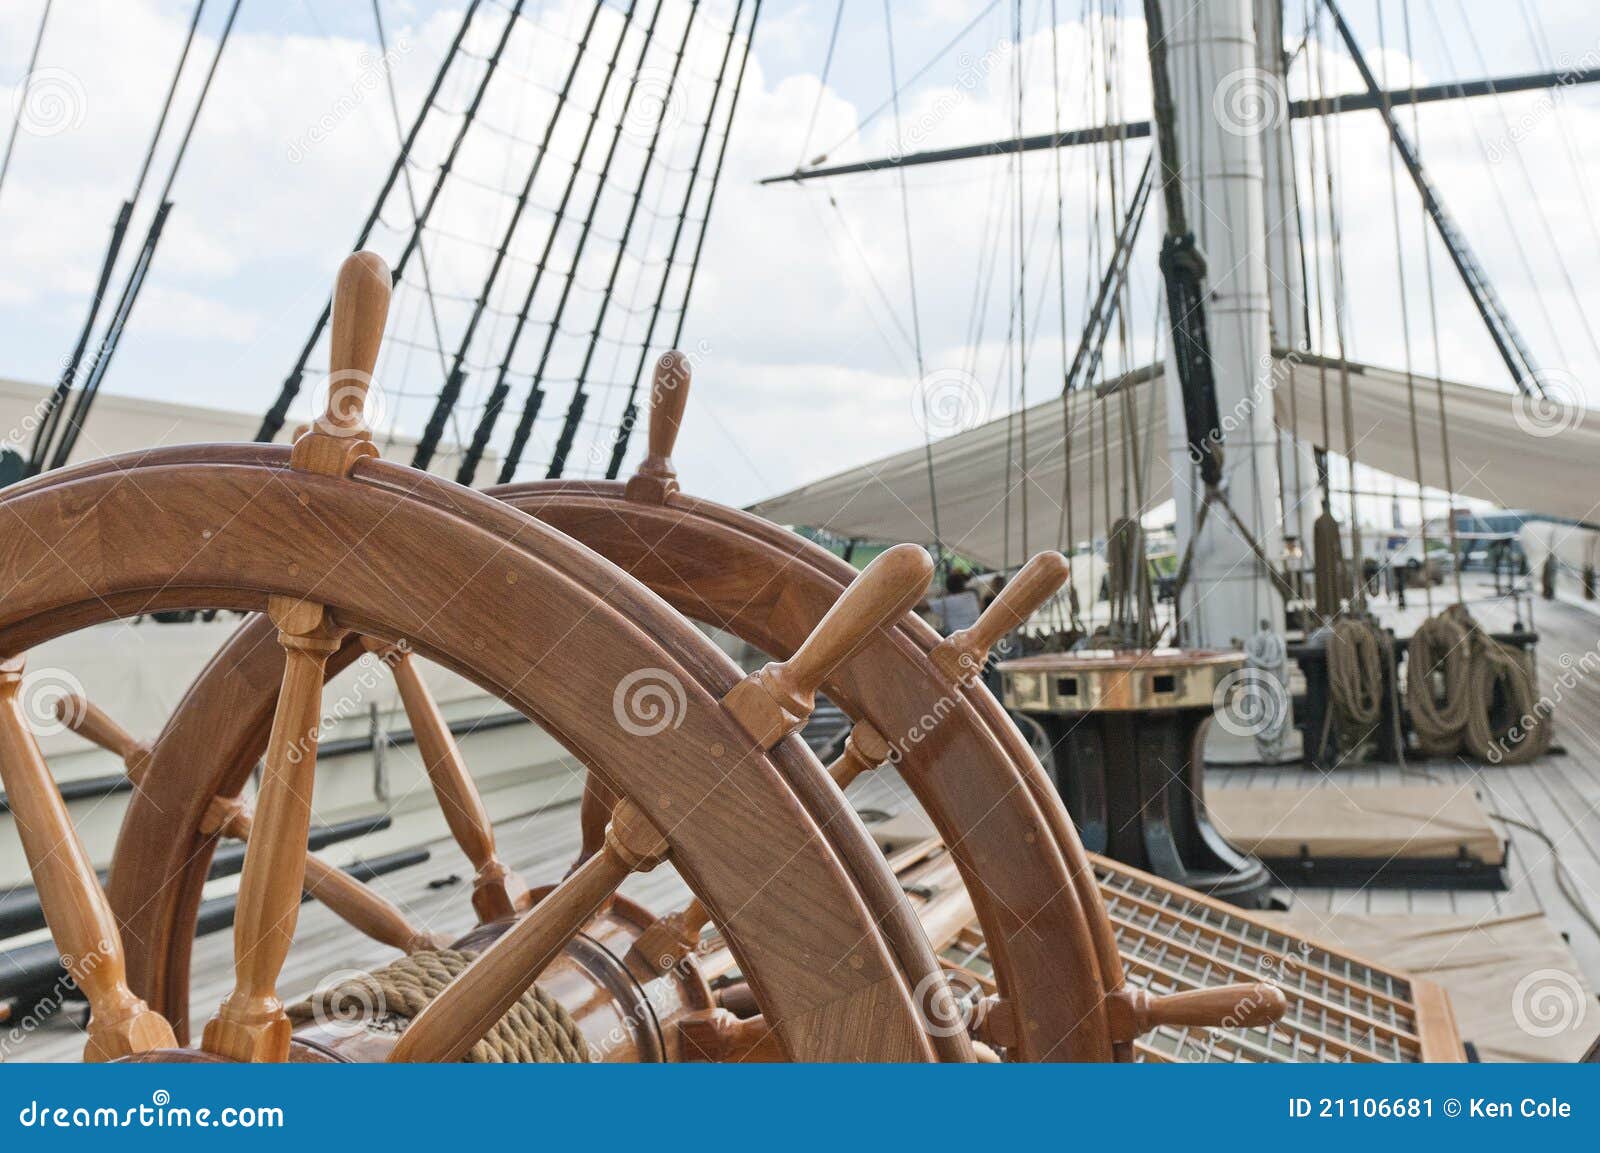 wheel of large sailing ship